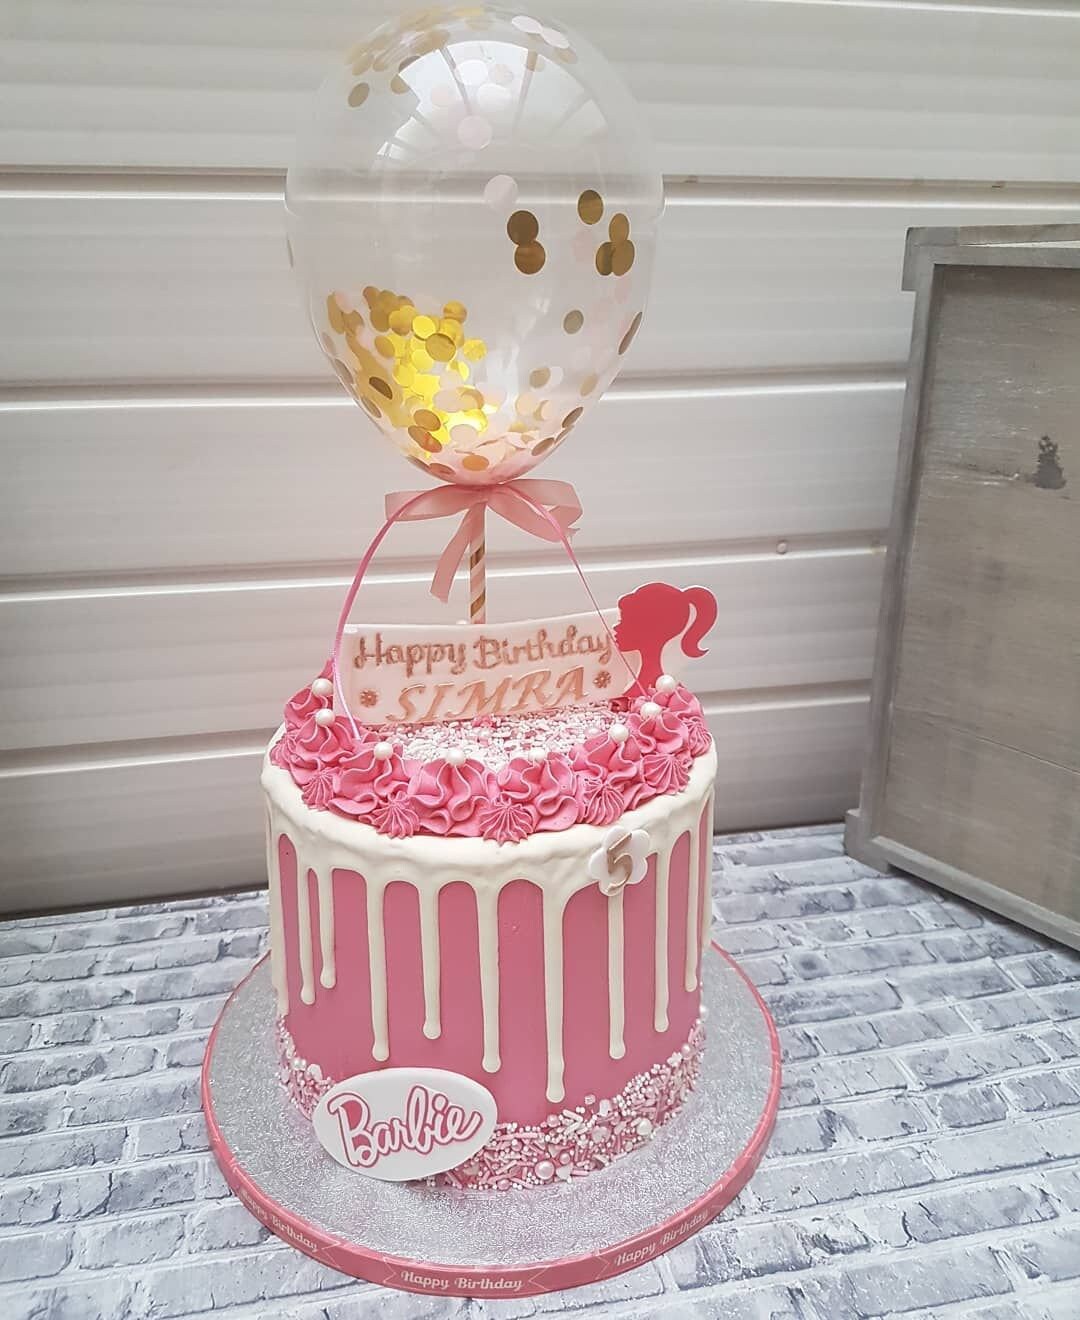 Details about   1 Set Mini Confetti Sequin Balloon Cake Topper Wedding Party Birthday Decor UK 